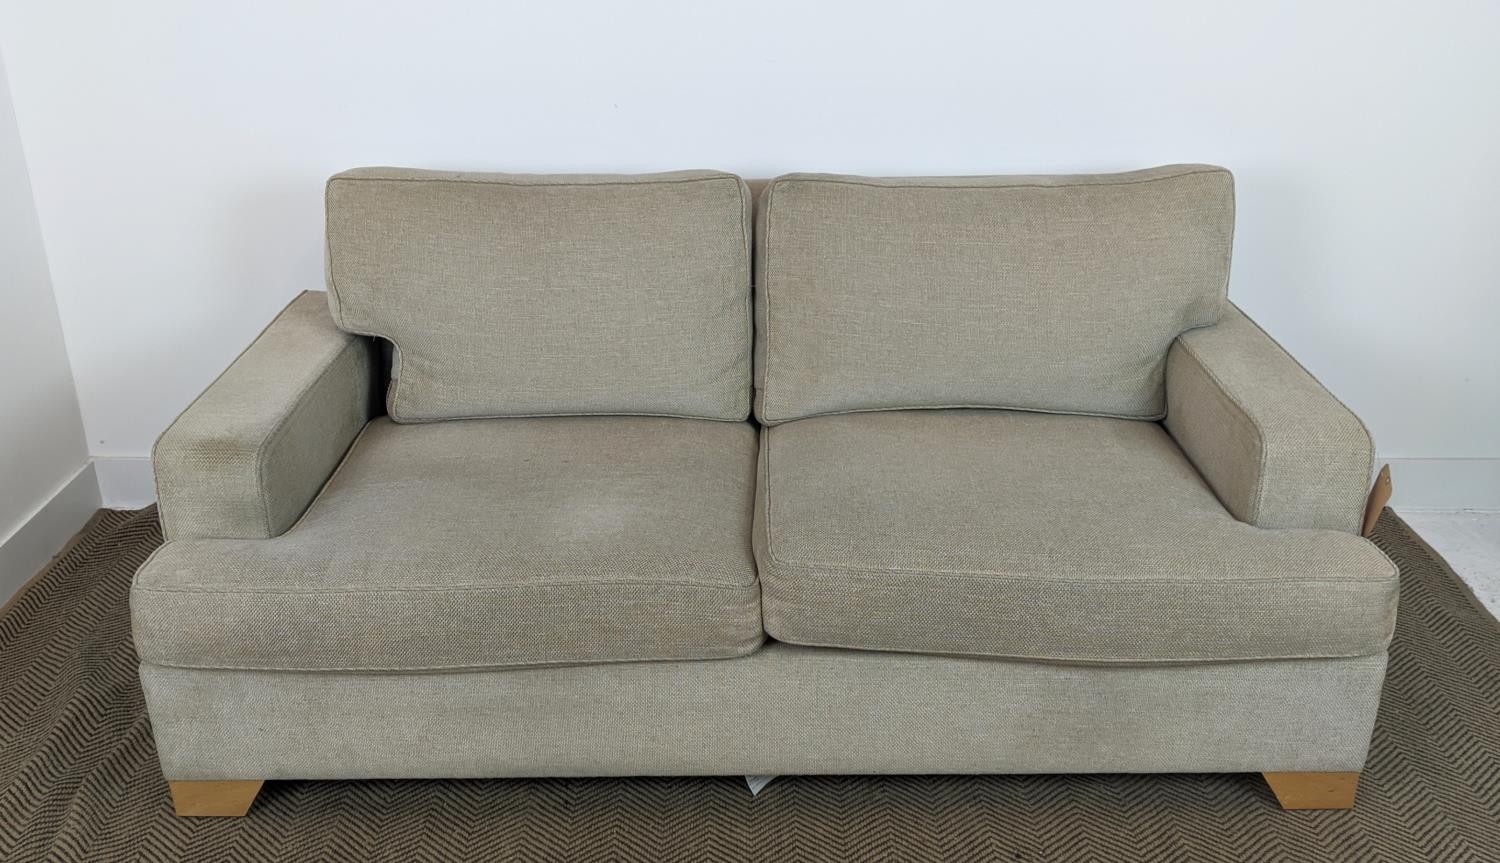 KINGCOME SHERWOOD SOFA, light brown upholstery, 181cm W x 75cm H x 95cm D. - Image 2 of 7